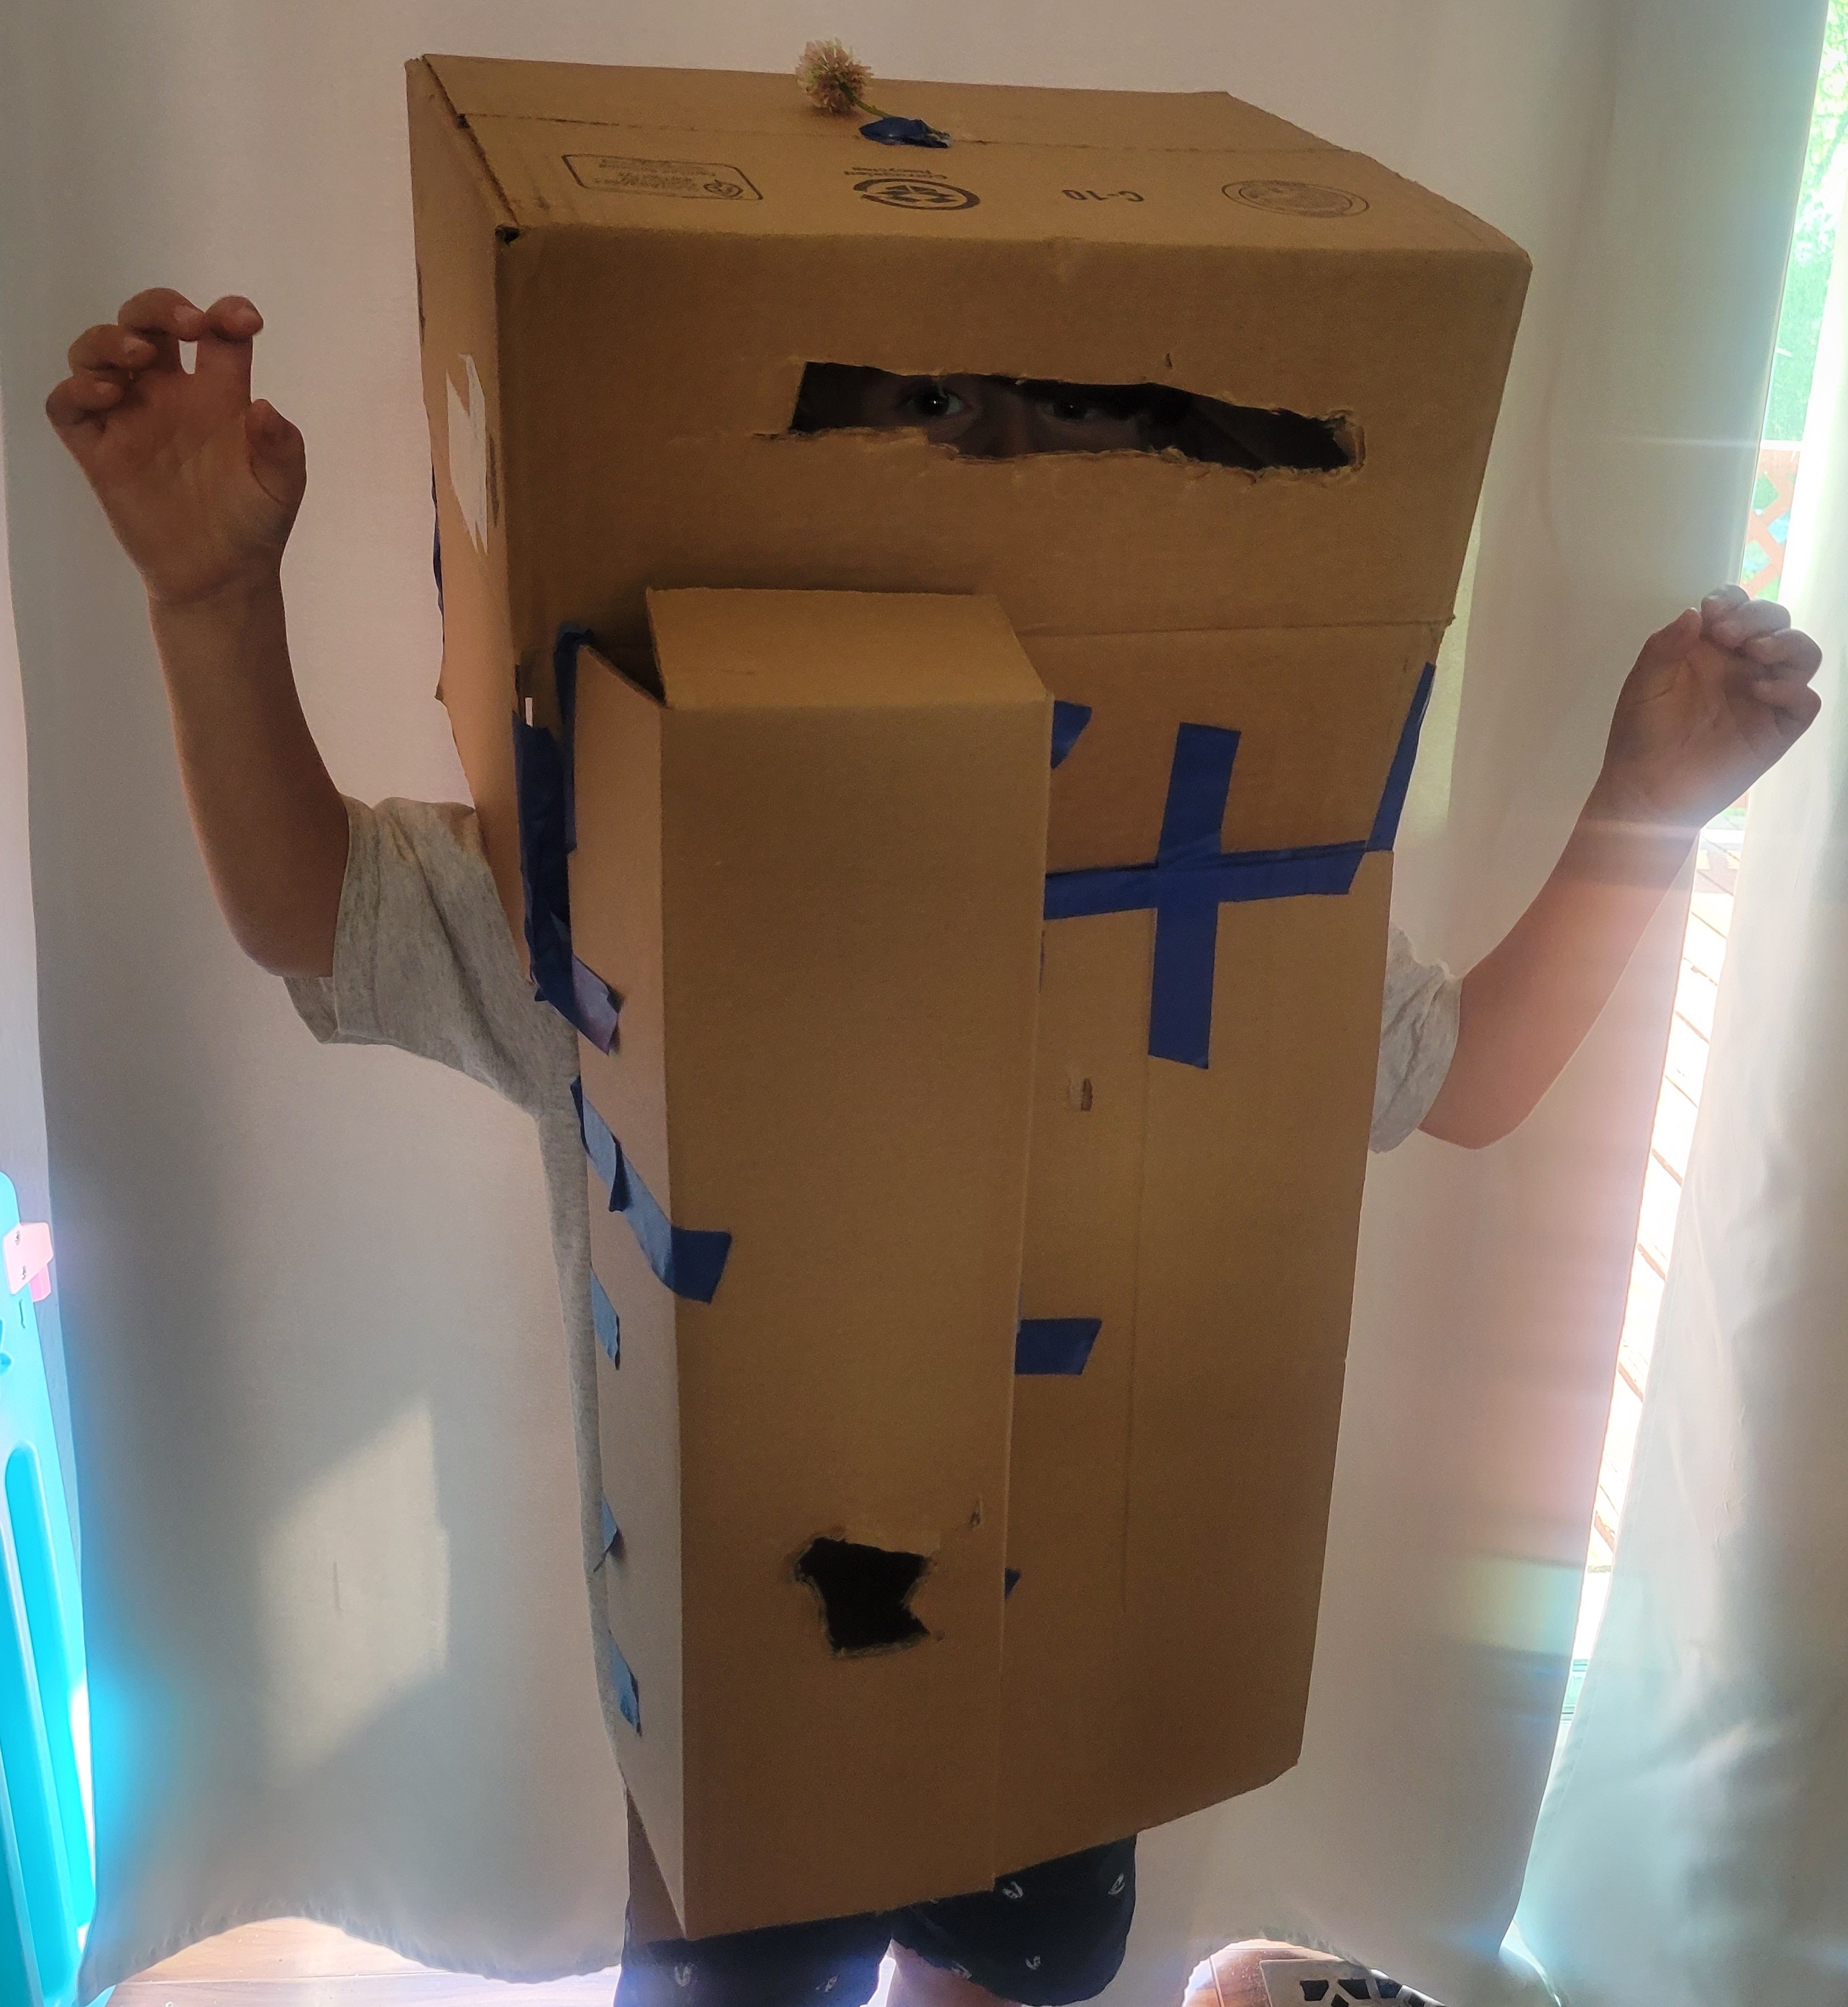 Toddler dressed up as Robot